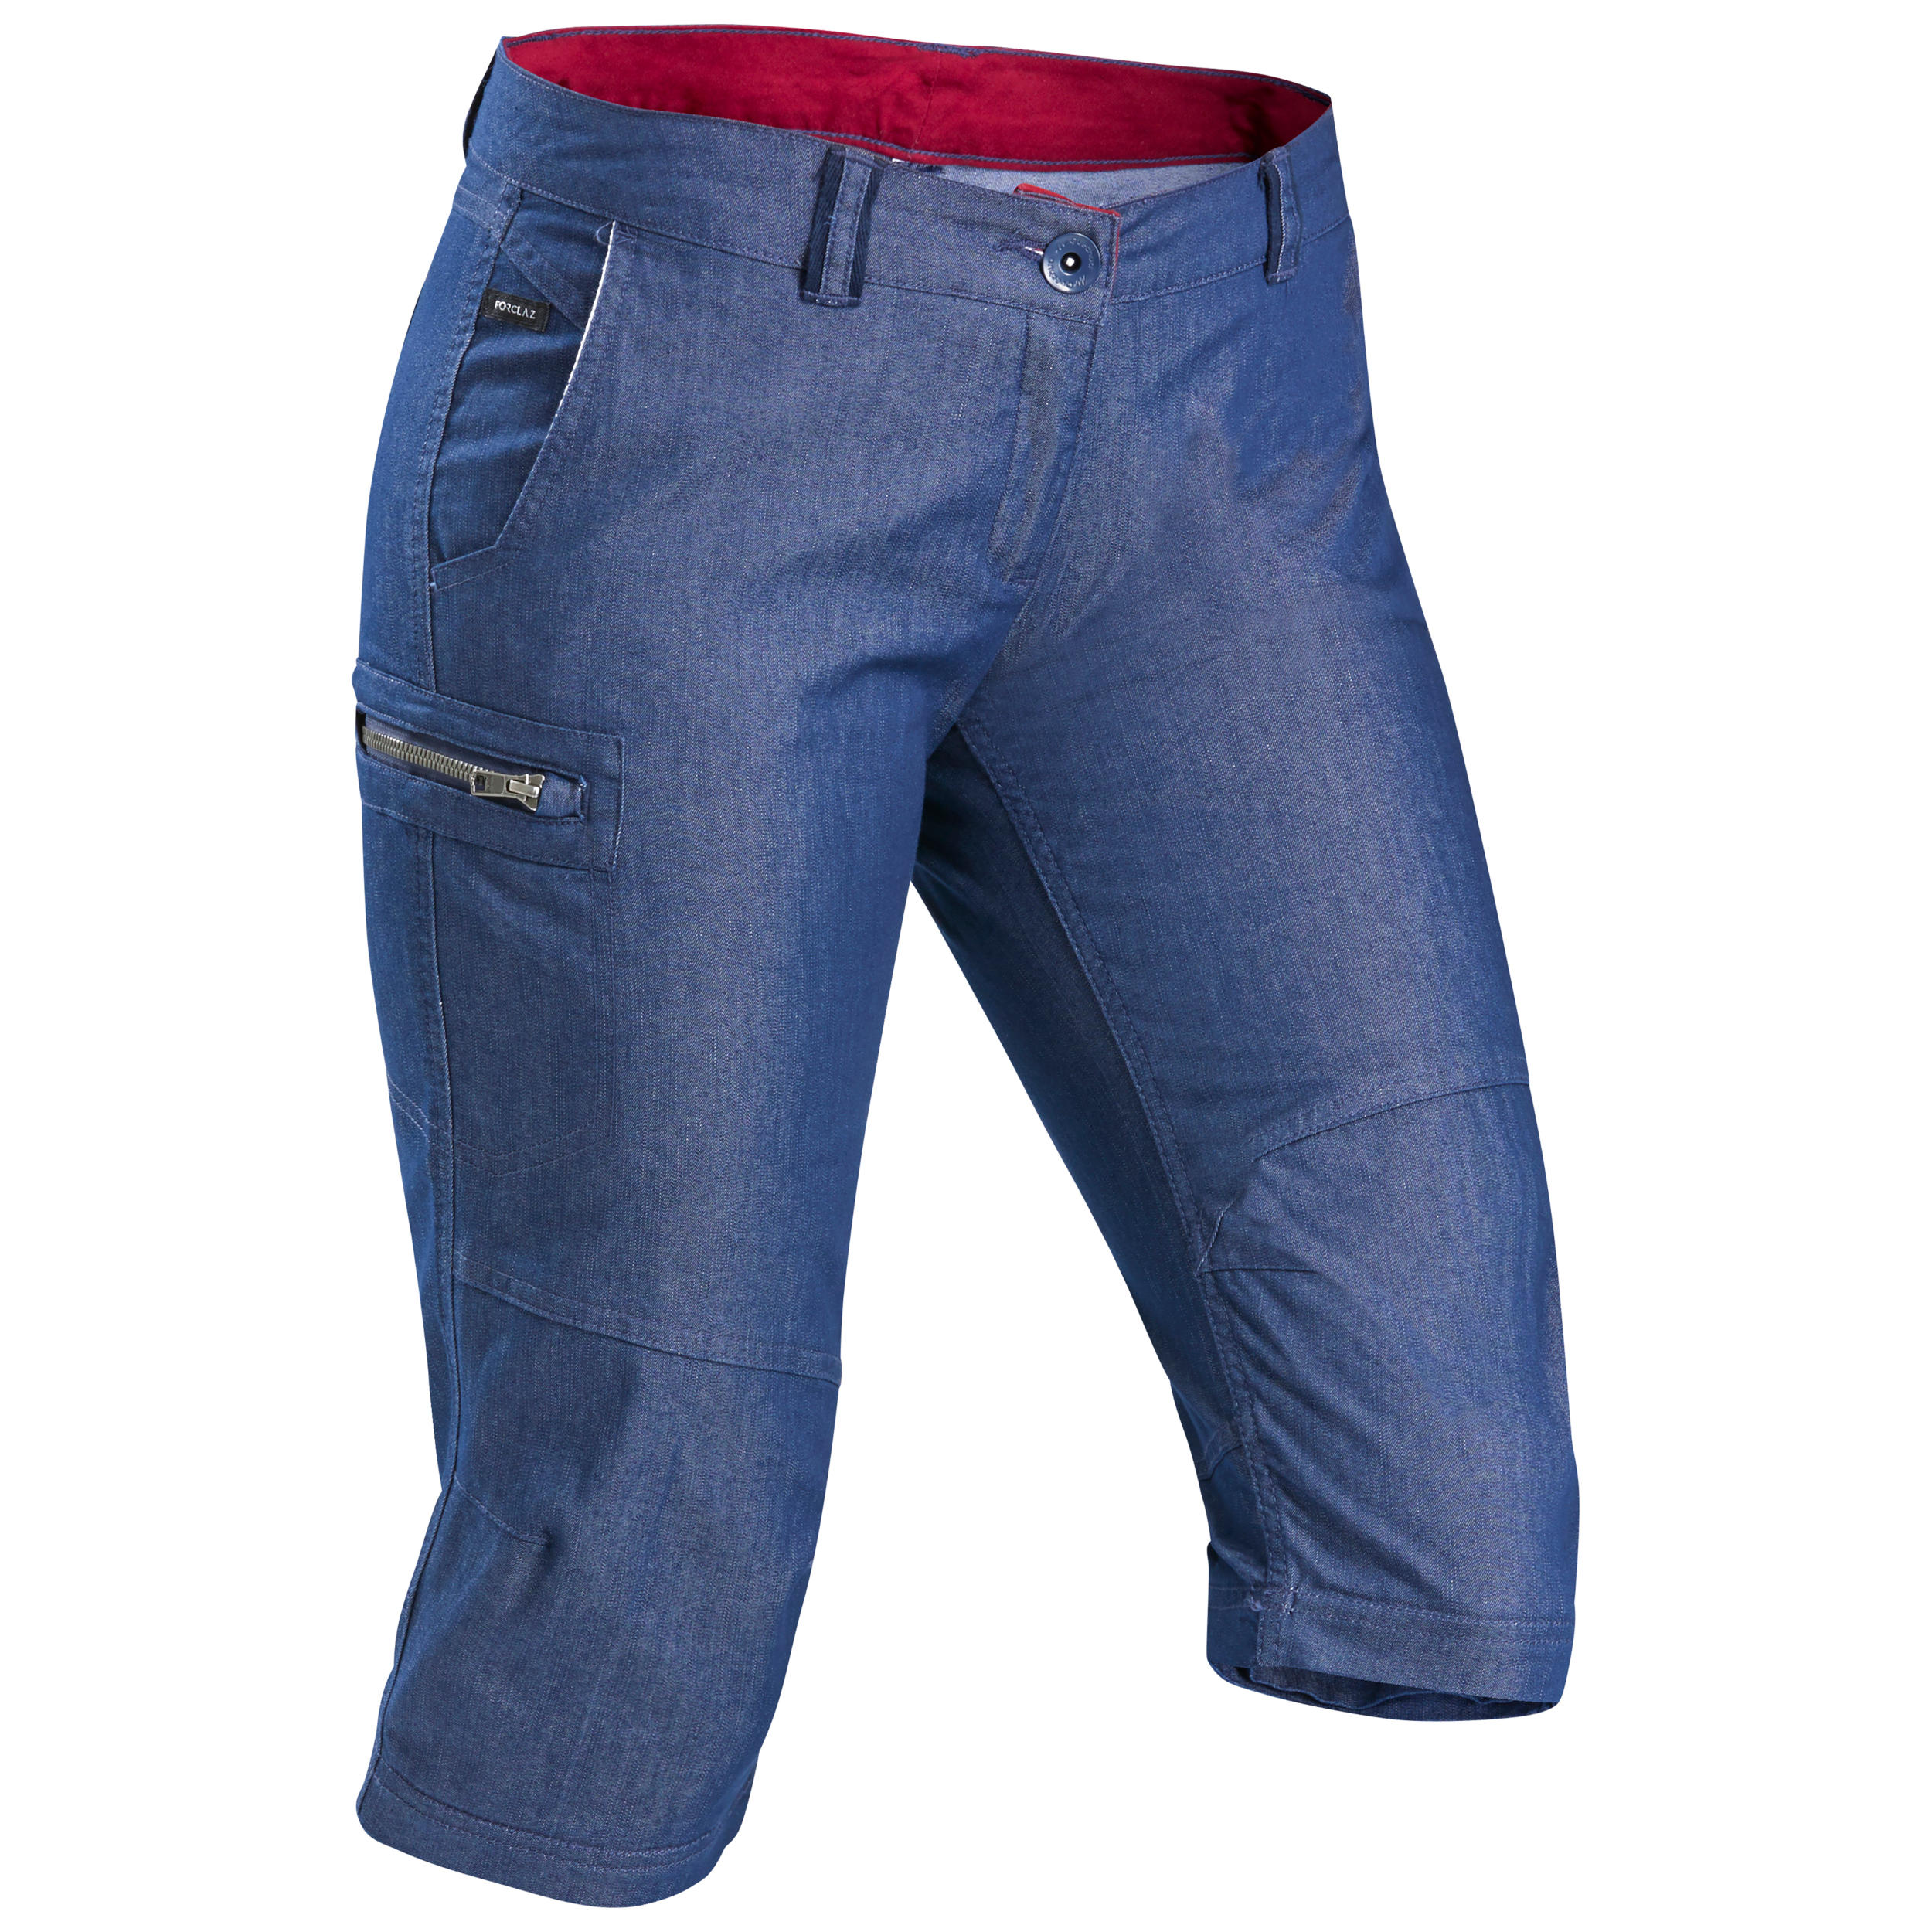 Women's travel trekking zip-Off trousers - TRAVEL 100 - blue denim 6/14